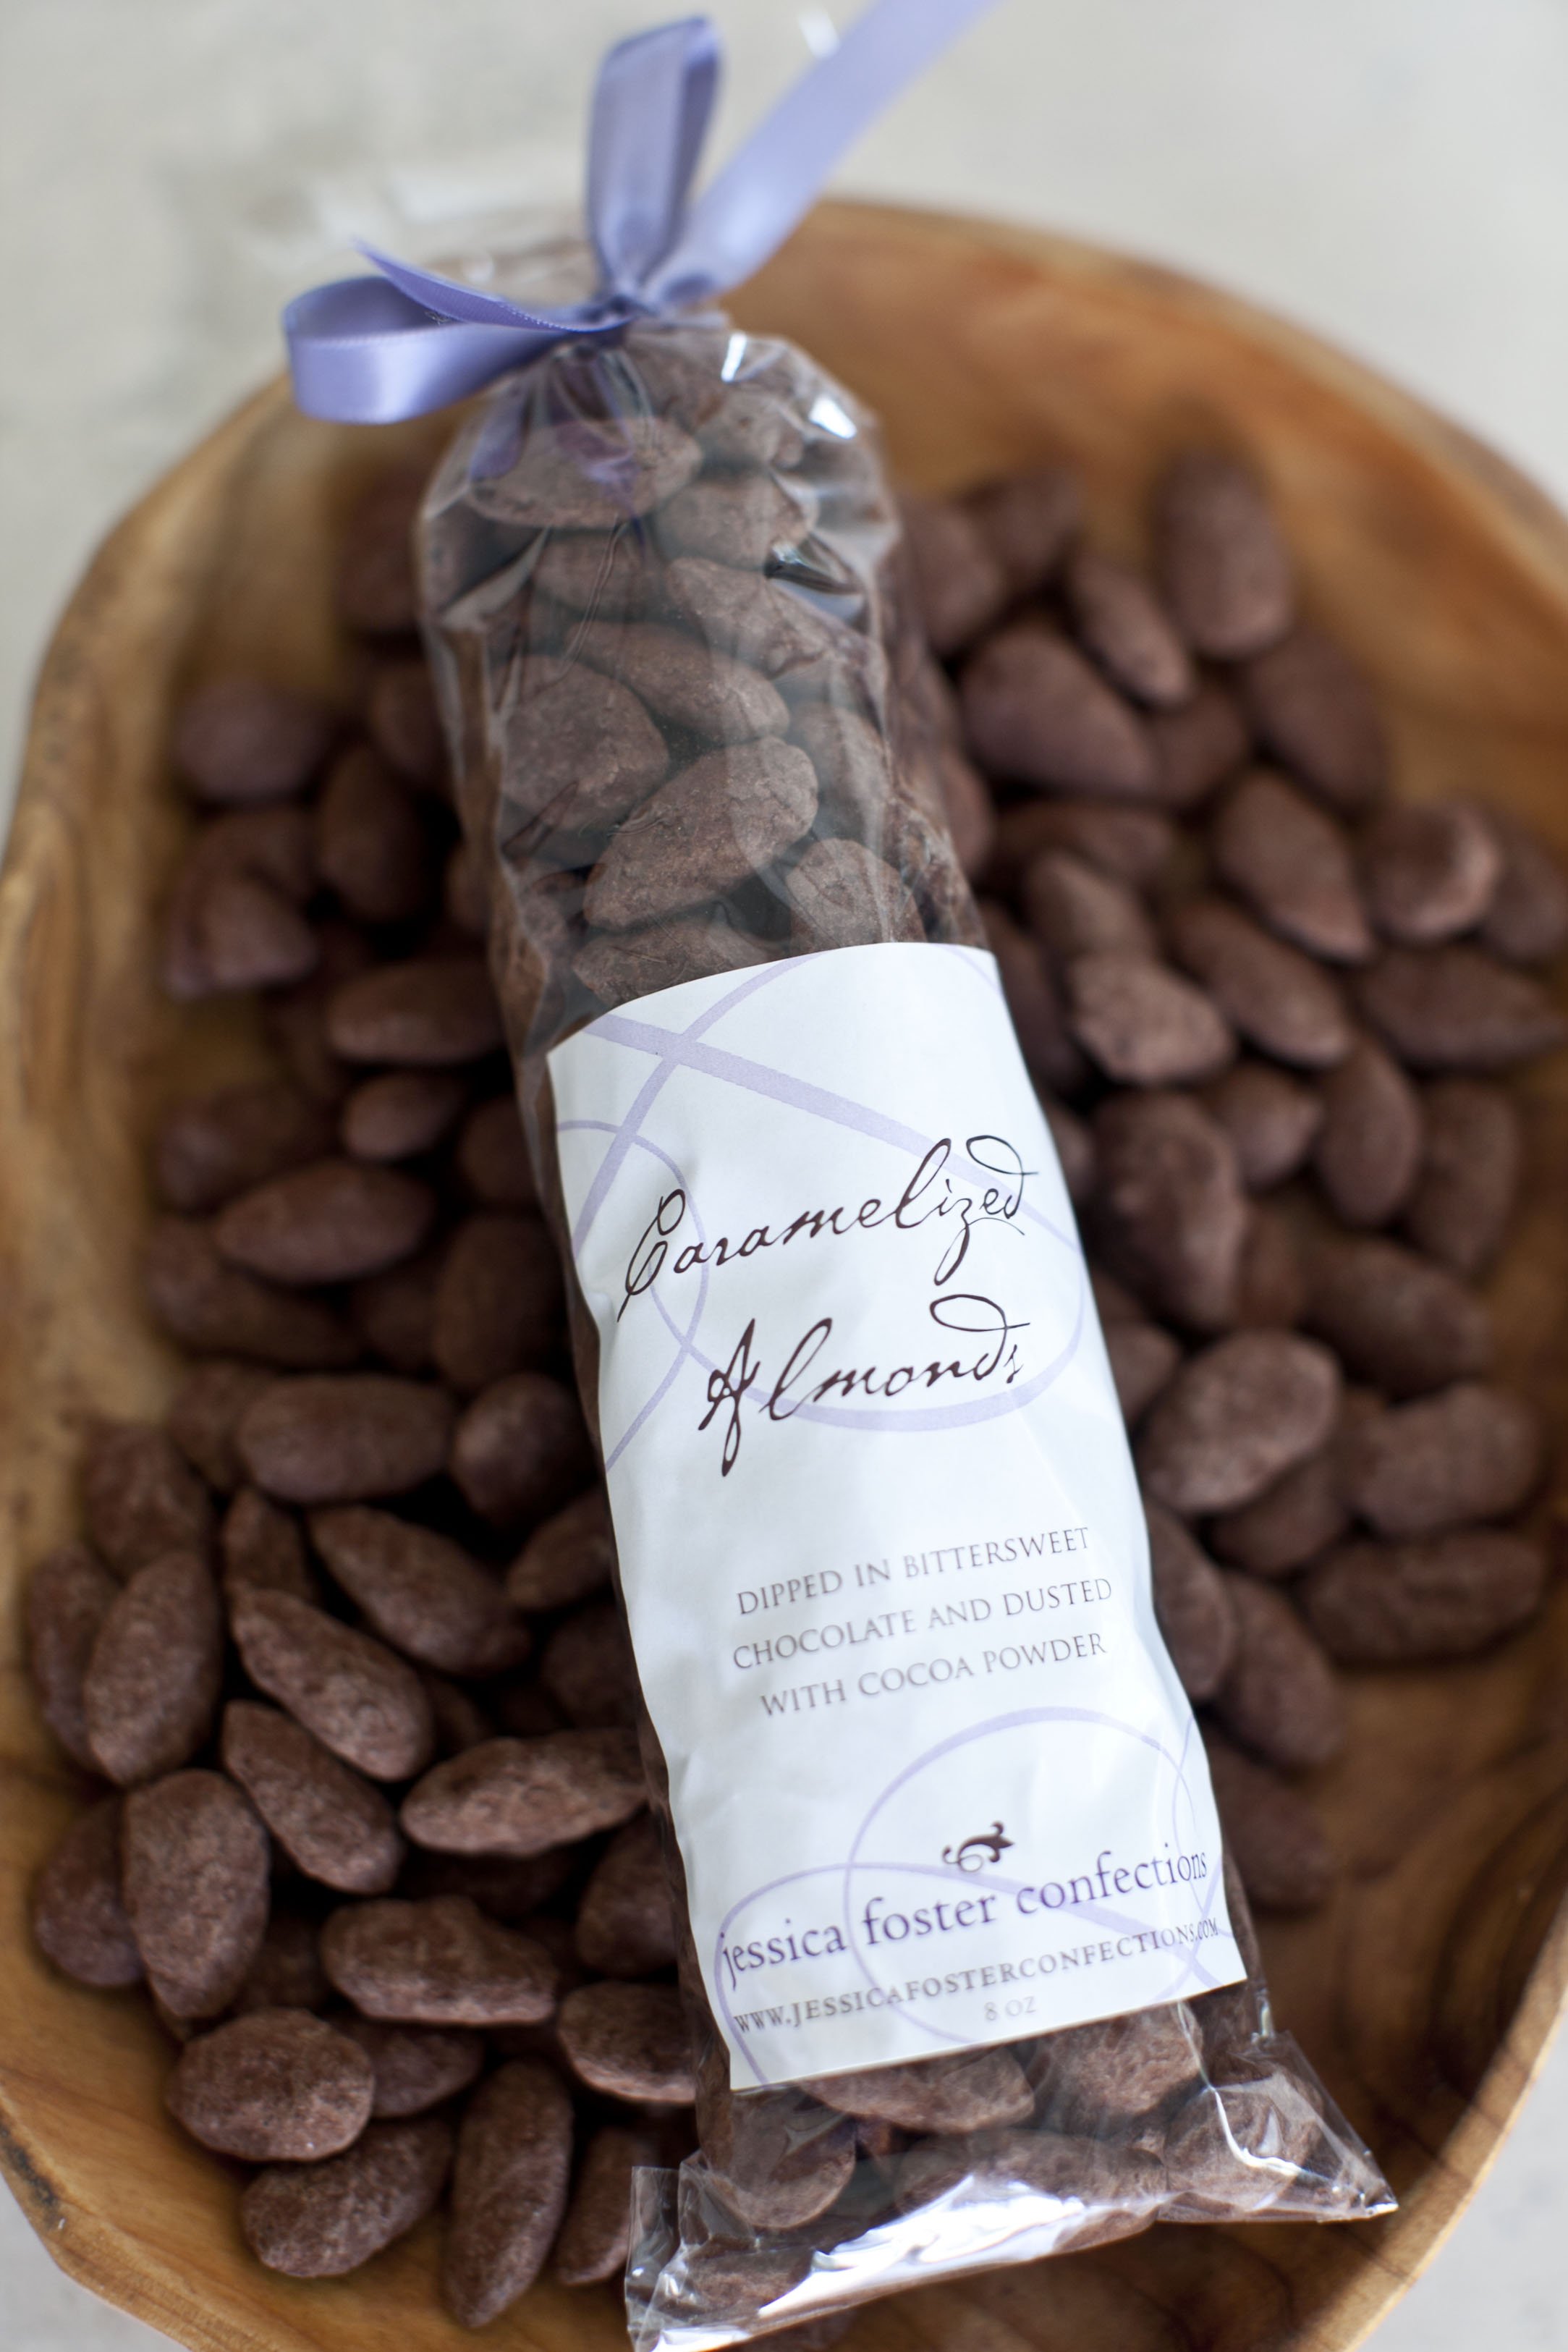 wwww.santabarbarawedding.com | Jessica Foster Confections | Tim Halberg | Chocolate-Covered Almonds